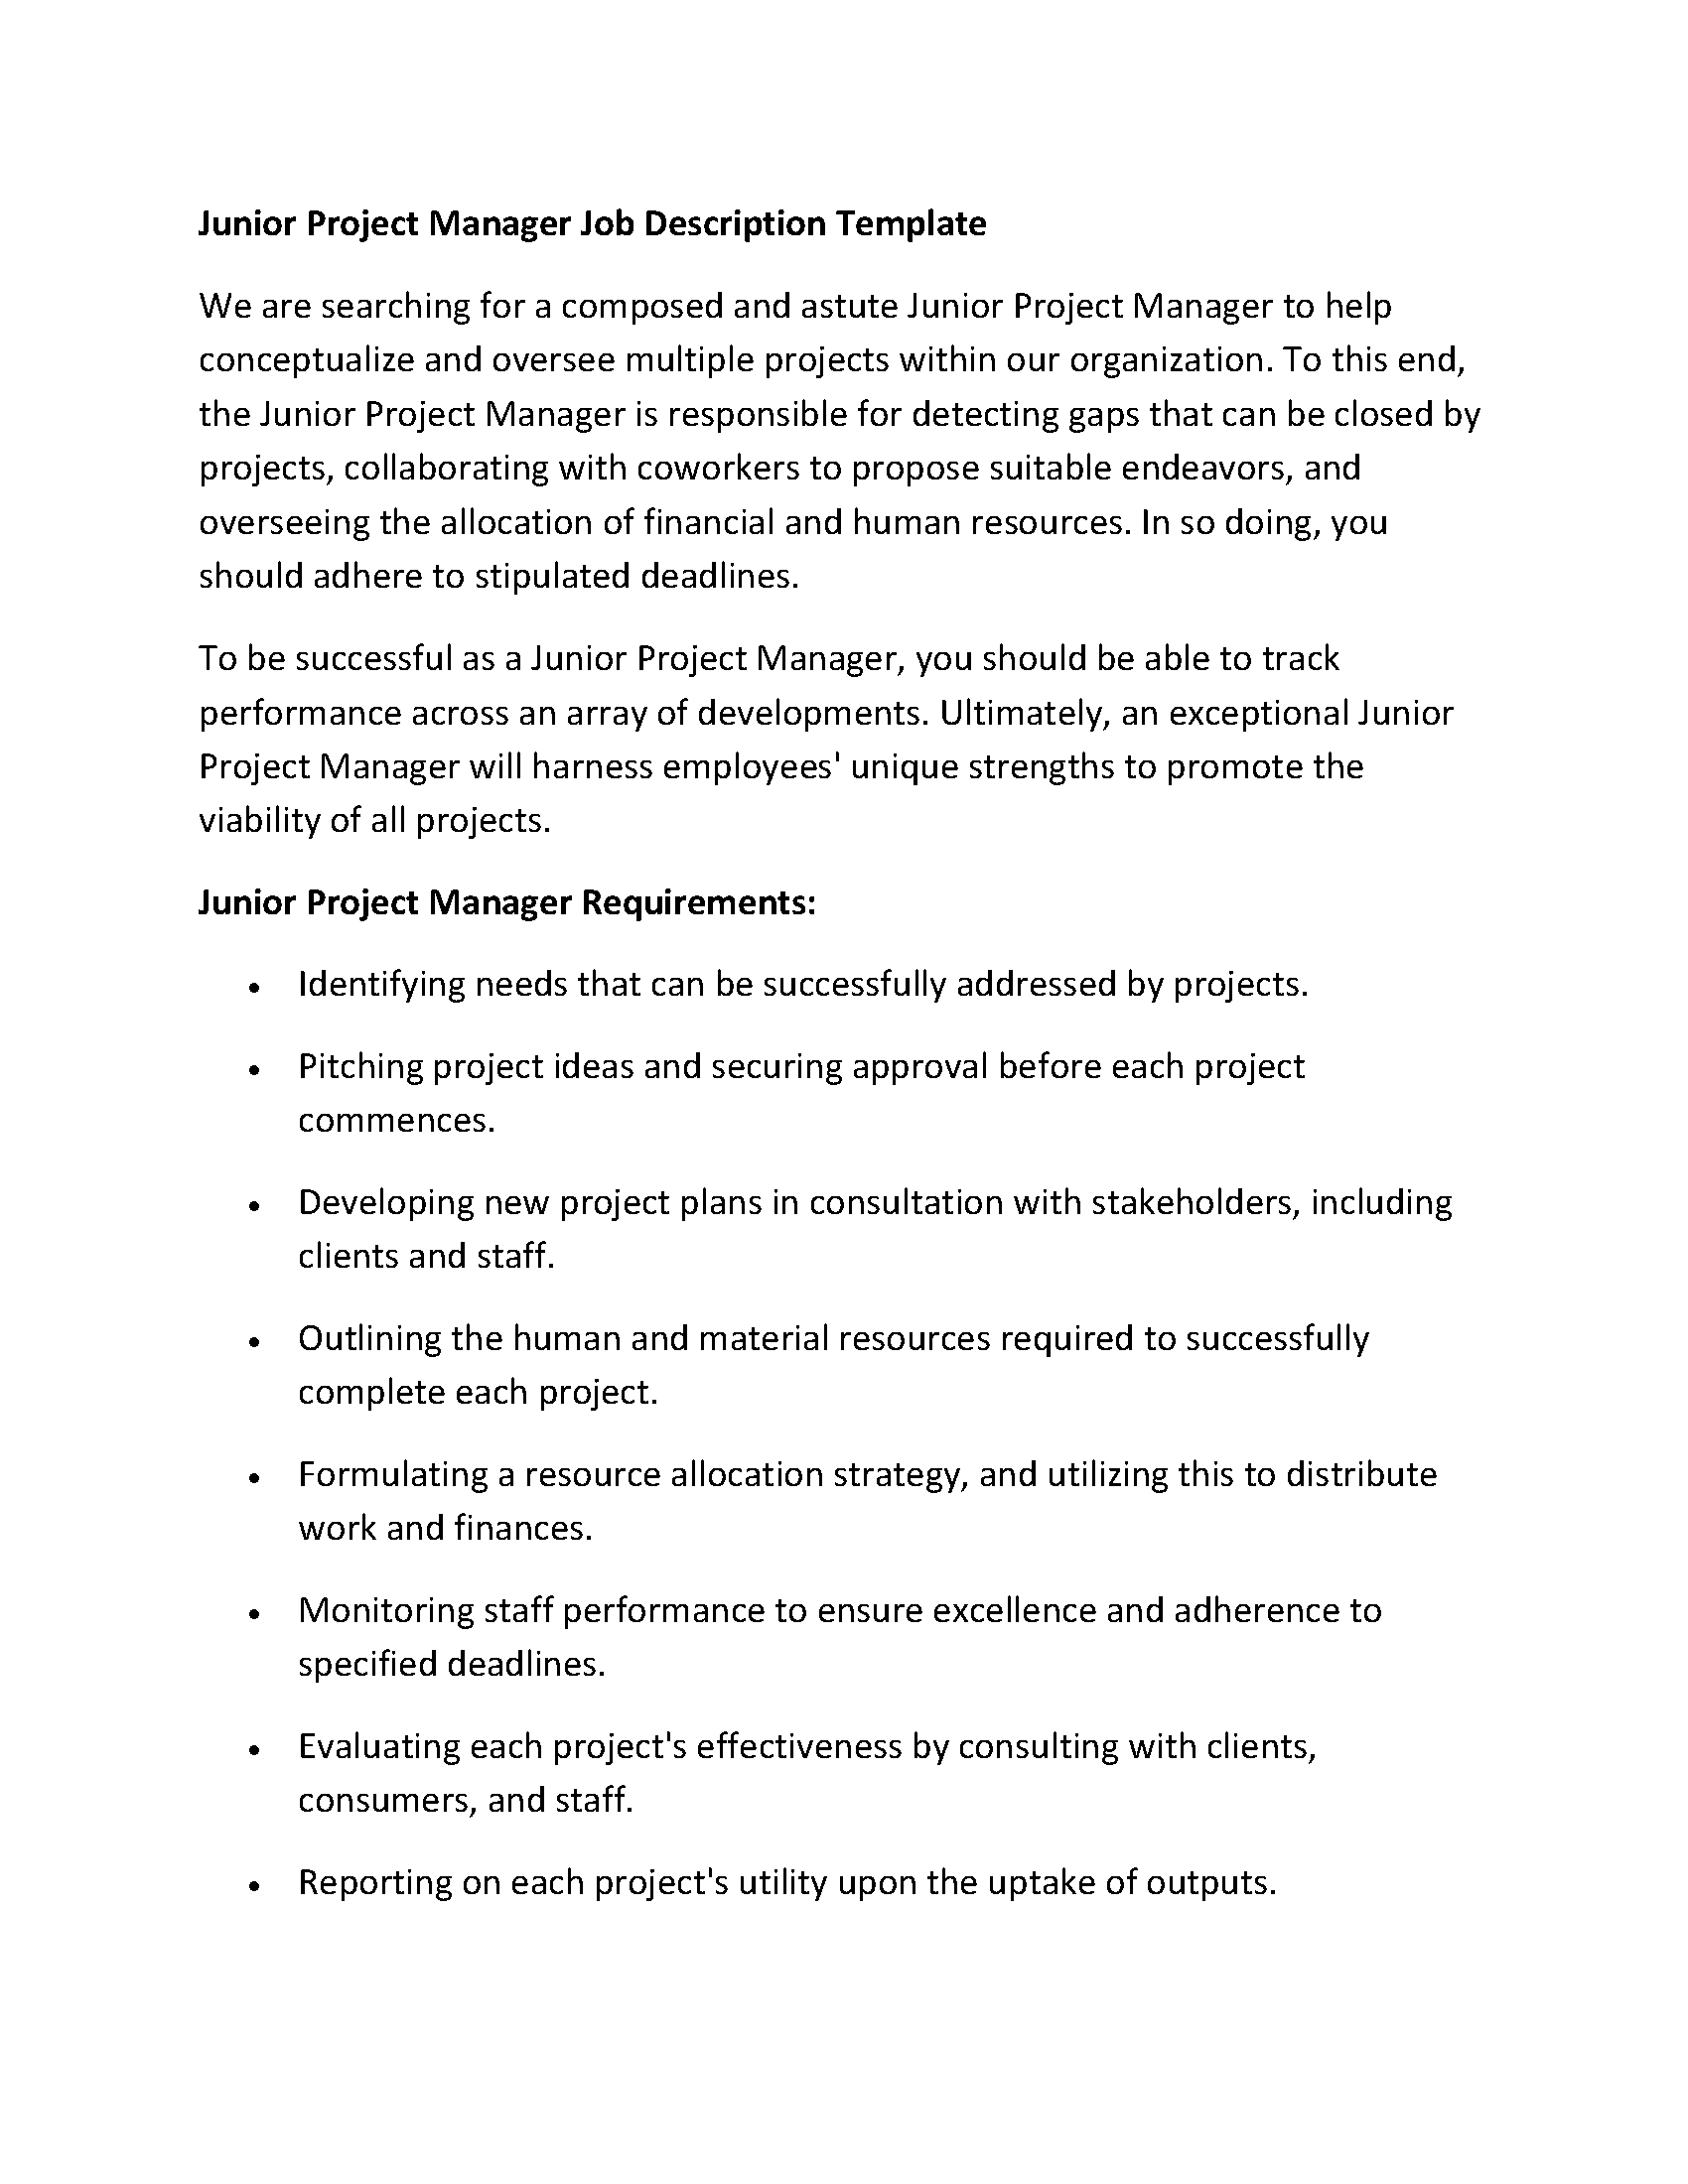 Junior Project Manager Job Description Template